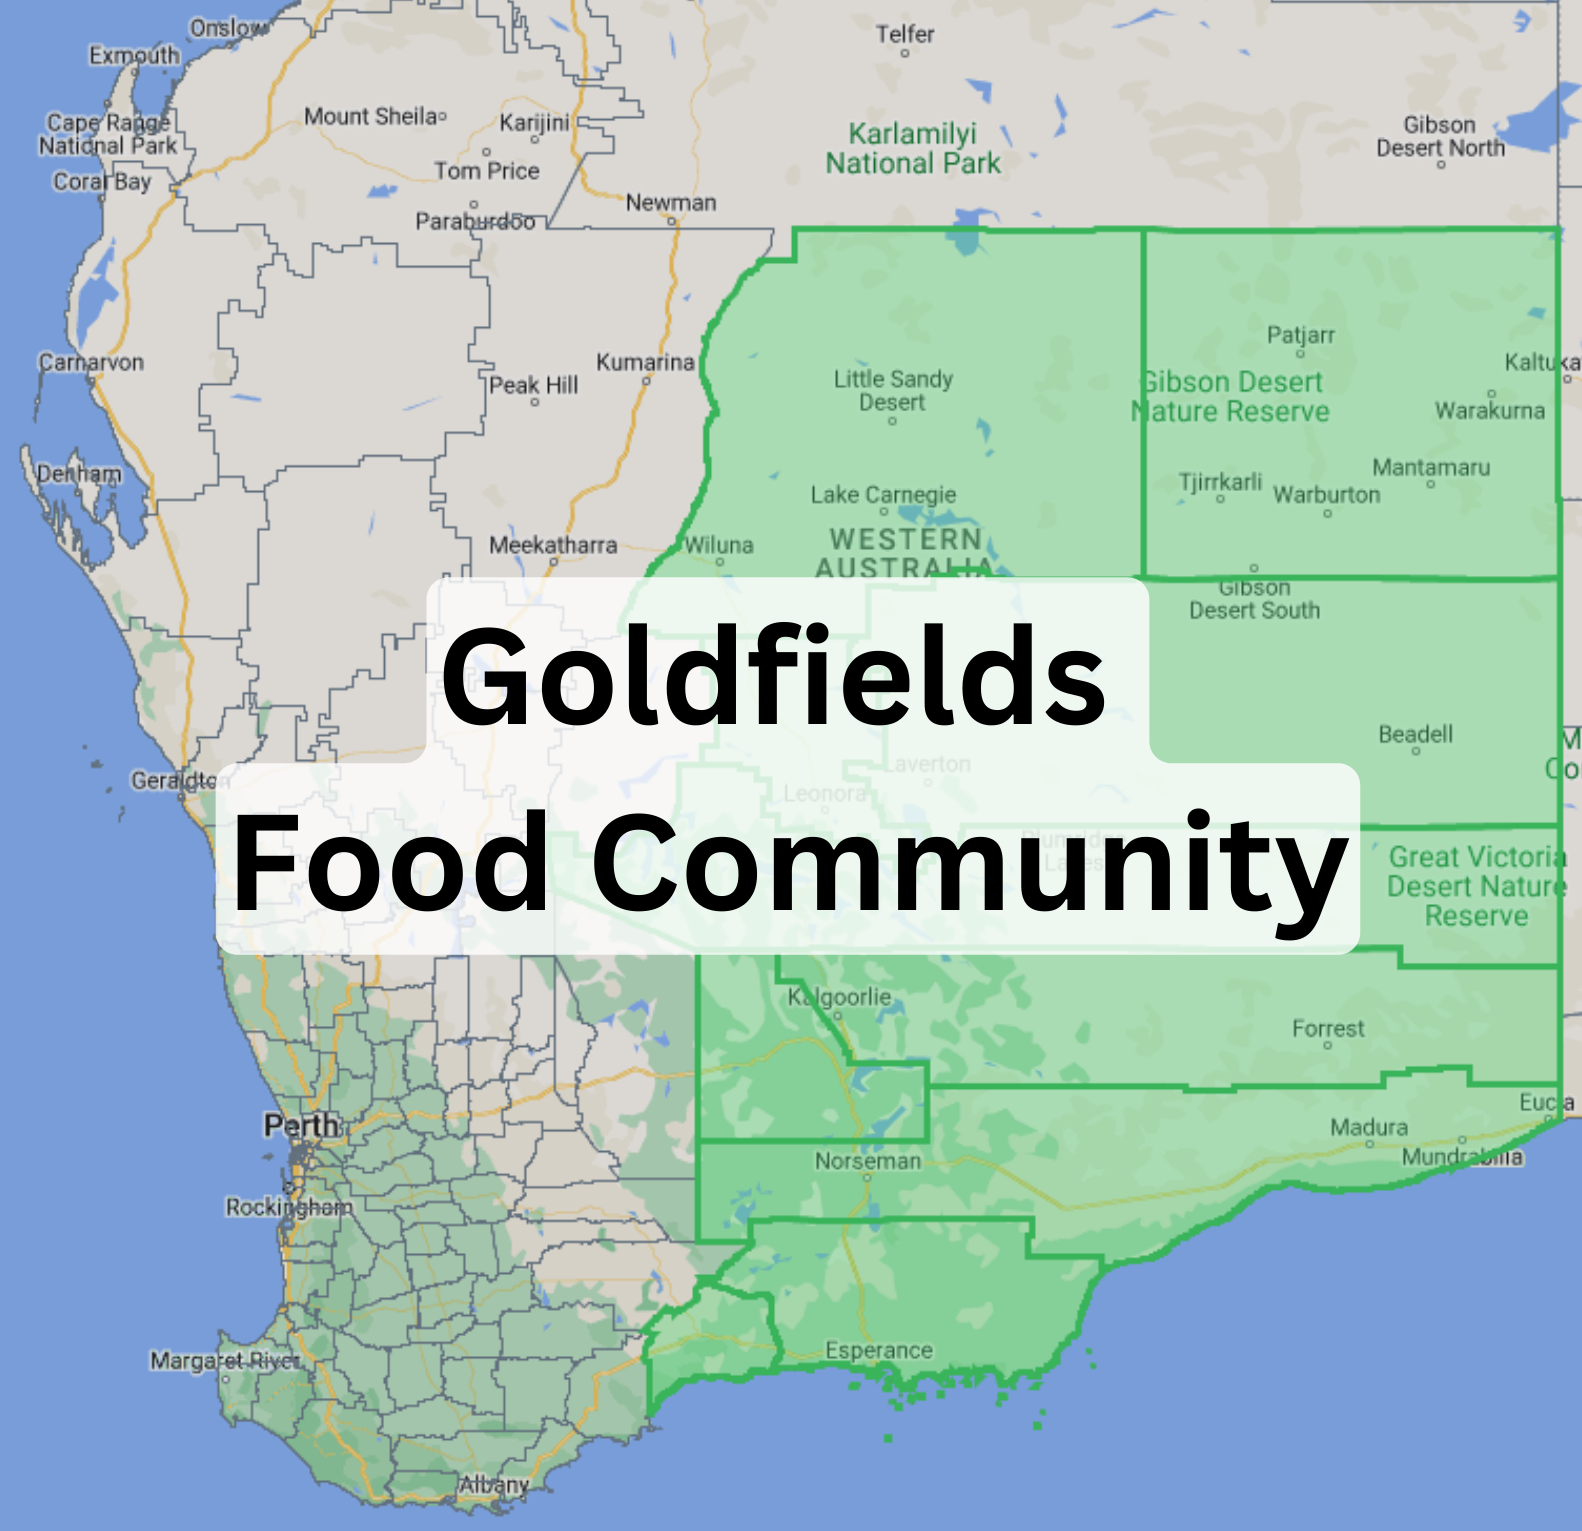 Goldfields Food Community